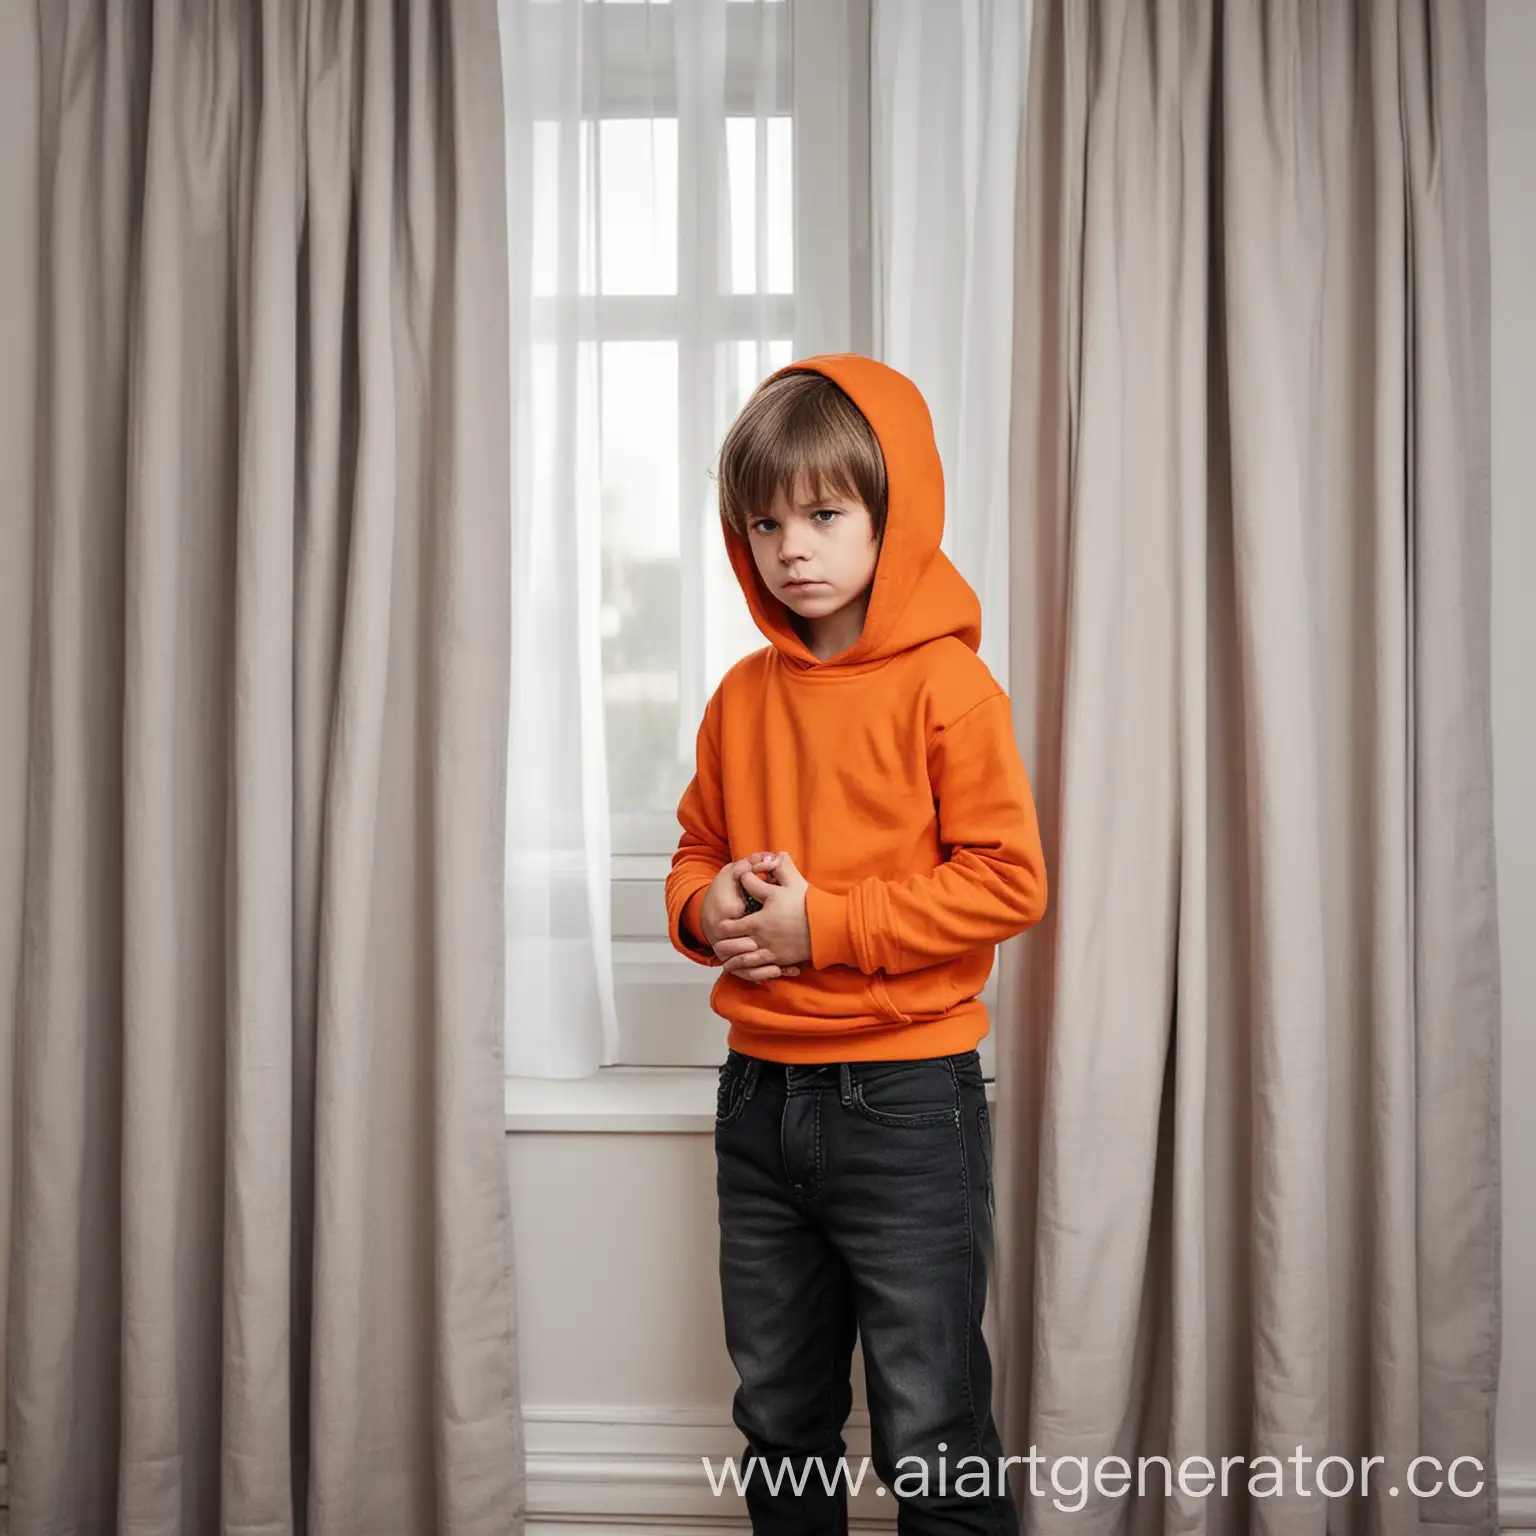 Sad-8YearOld-Boy-in-Orange-Hoodie-Holding-Stomach-in-Childrens-Room